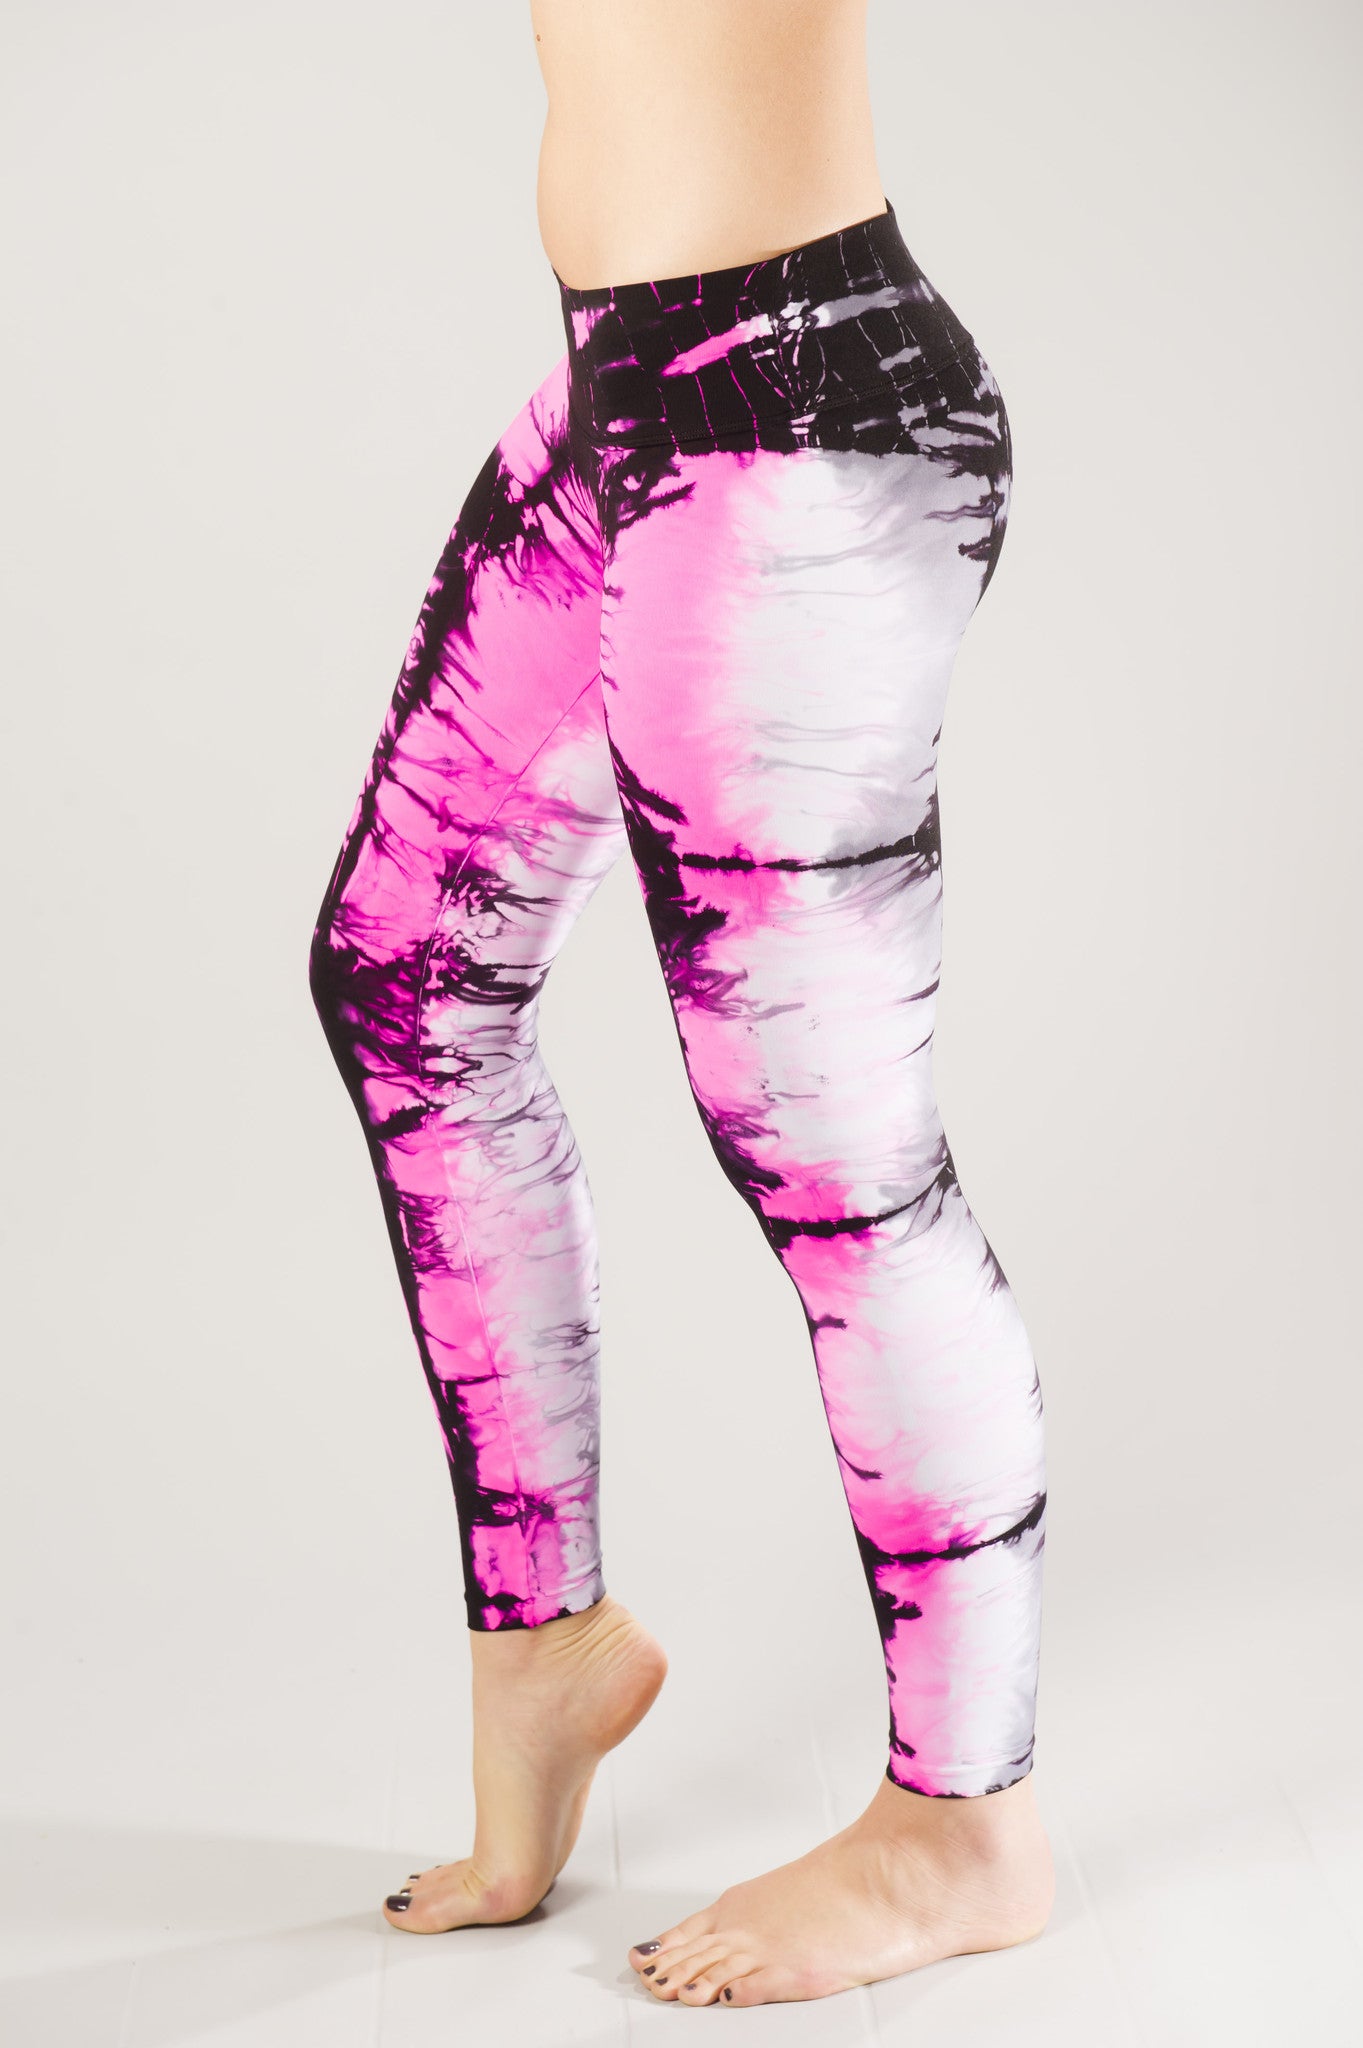 Alex Hi-Waisted Nebula Tie Dye Legging in Pink Multi – Threads 4